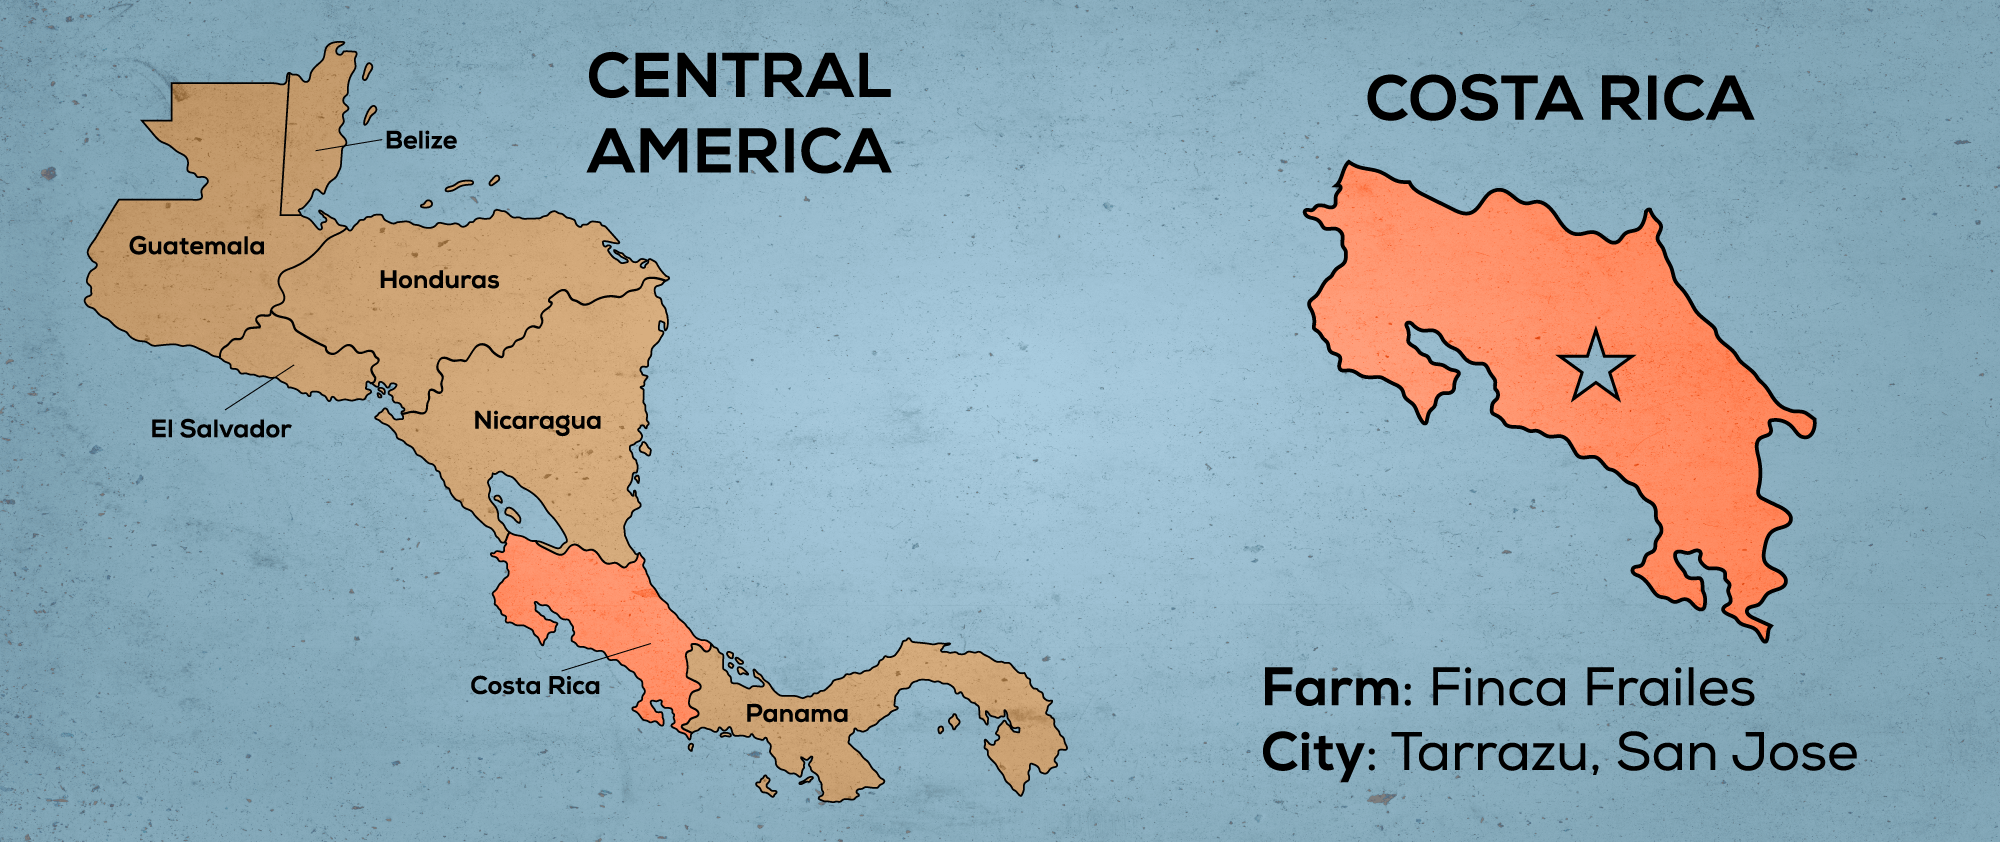 Map of Central America & Costa Rica